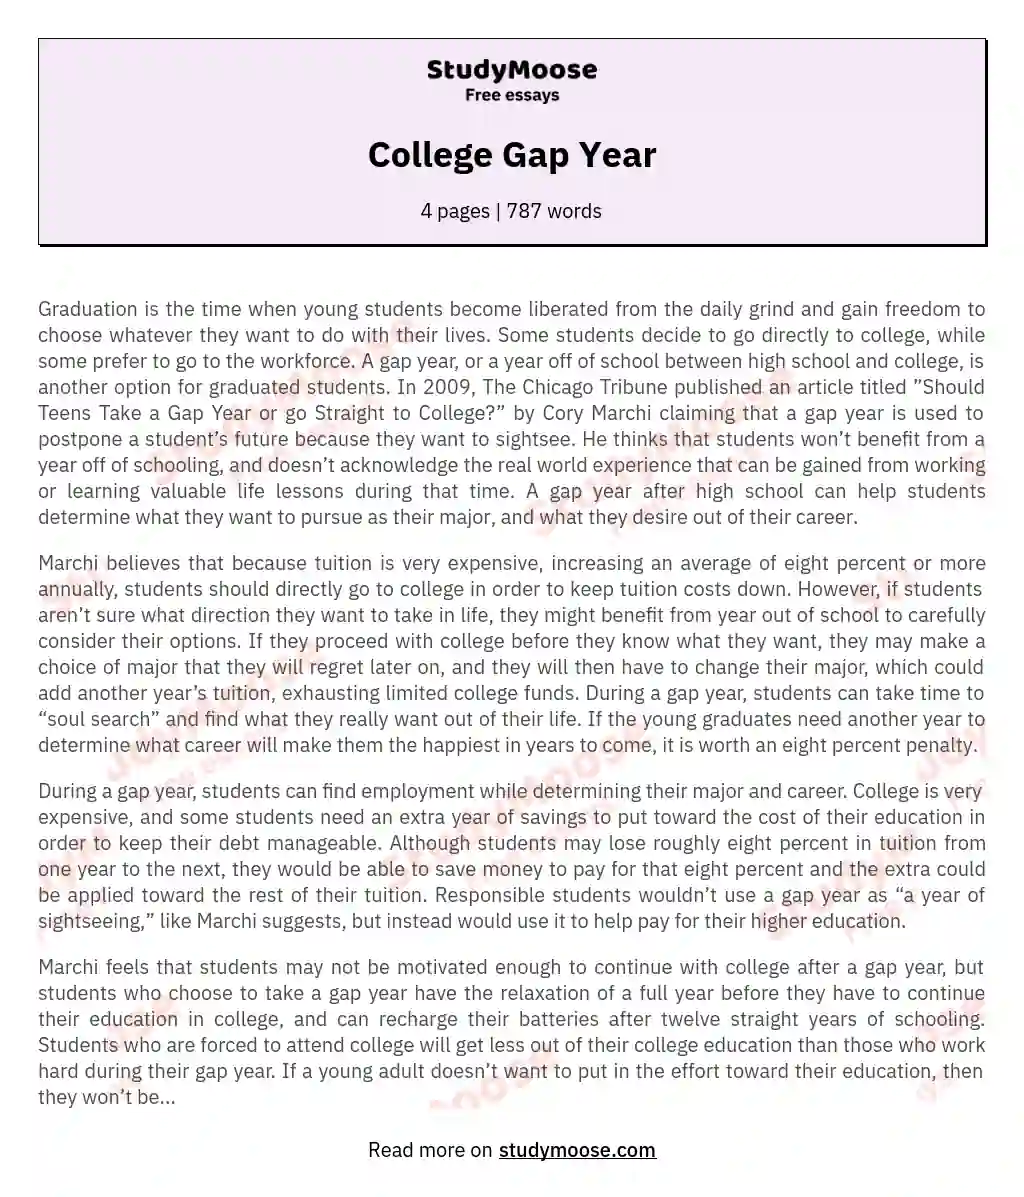 College Gap Year essay